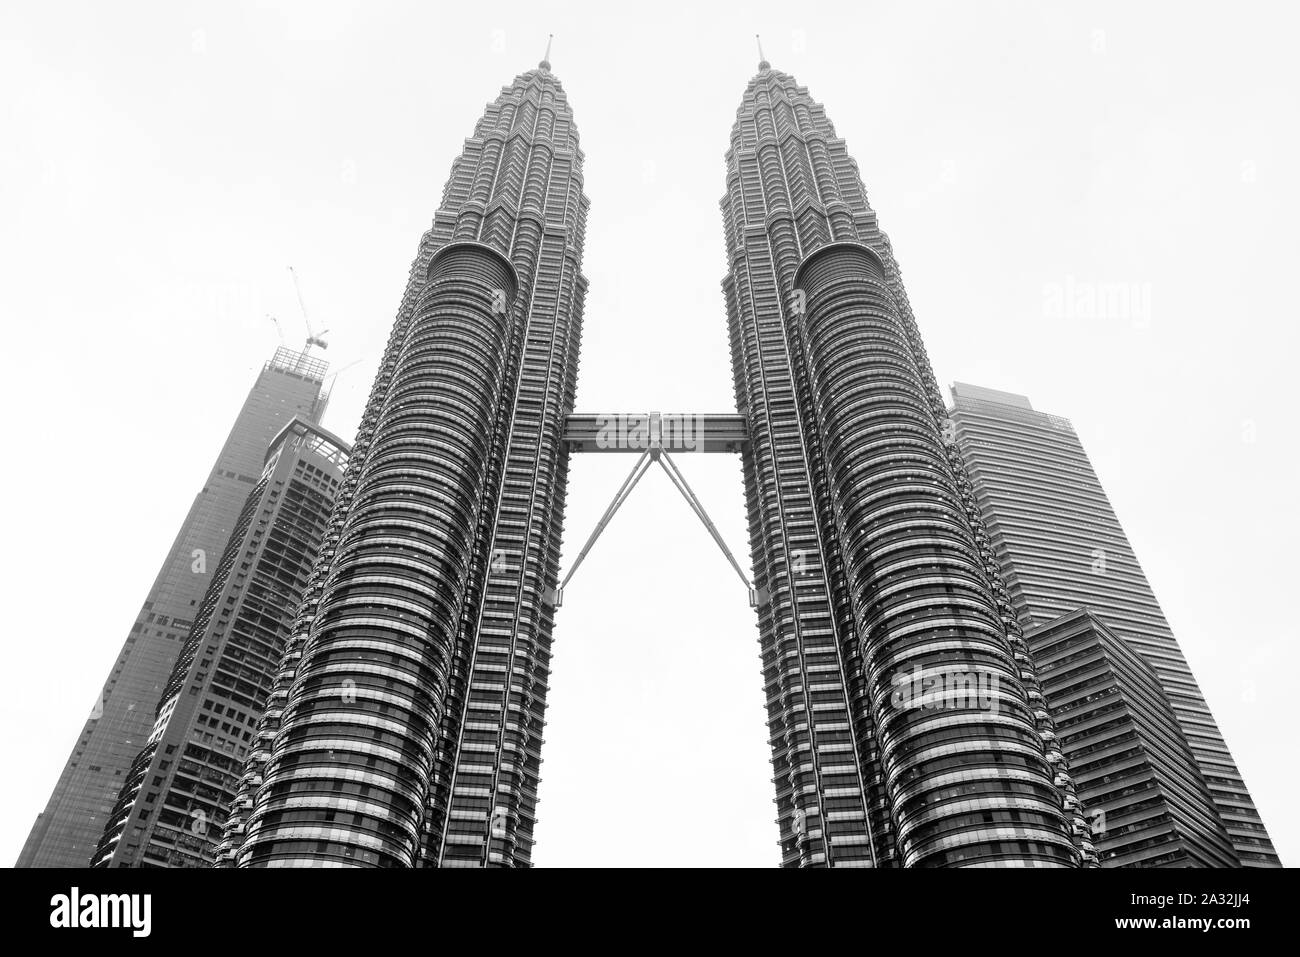 The Famous Petronas Towers In Kuala Lumpur, Malaysia Stock Photo